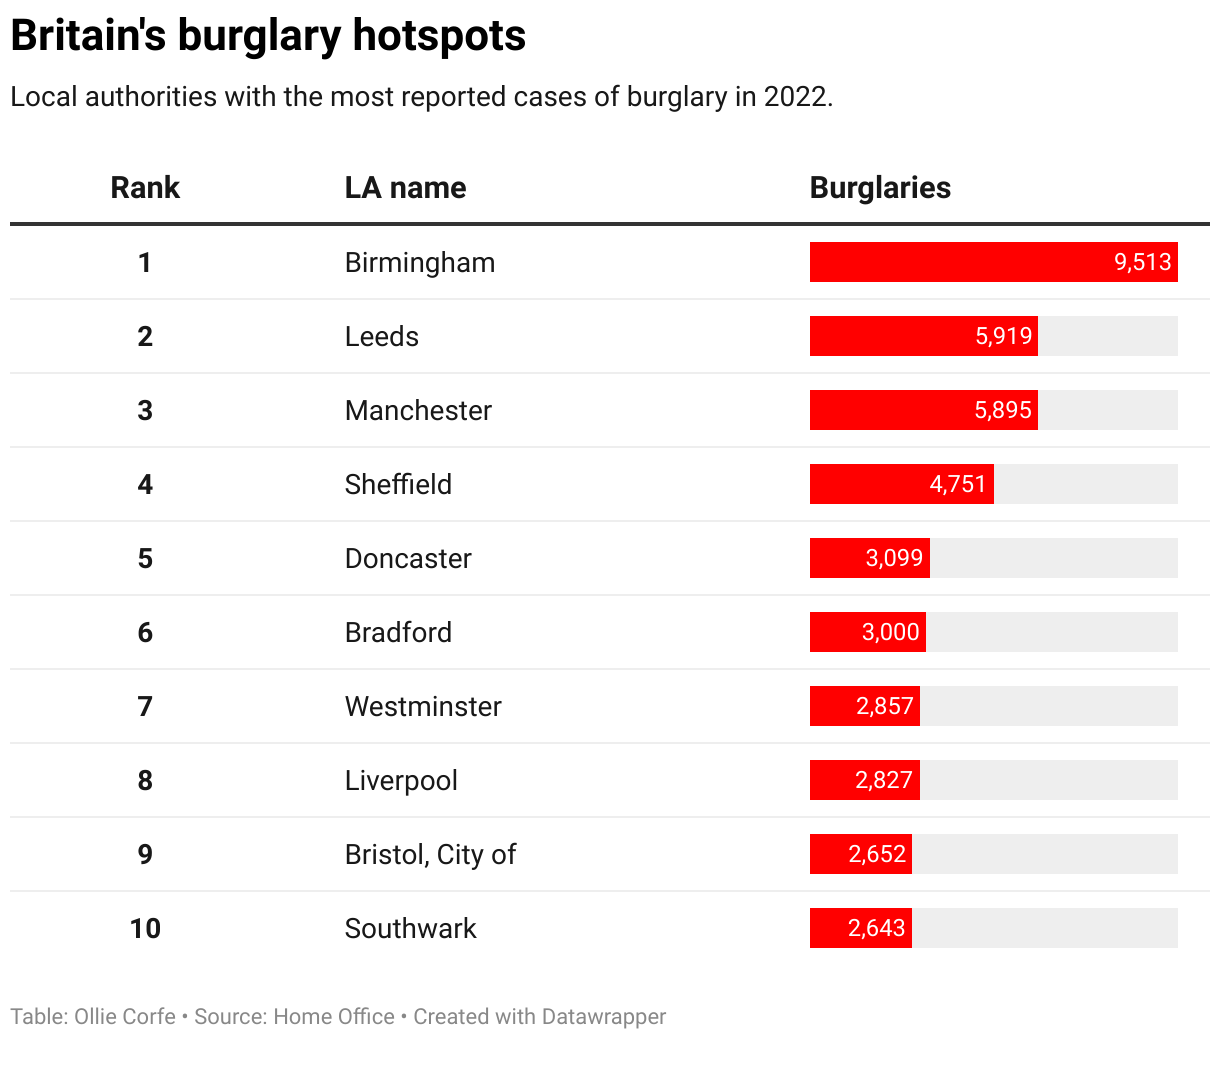 Table of Britain's burglary hotspots.